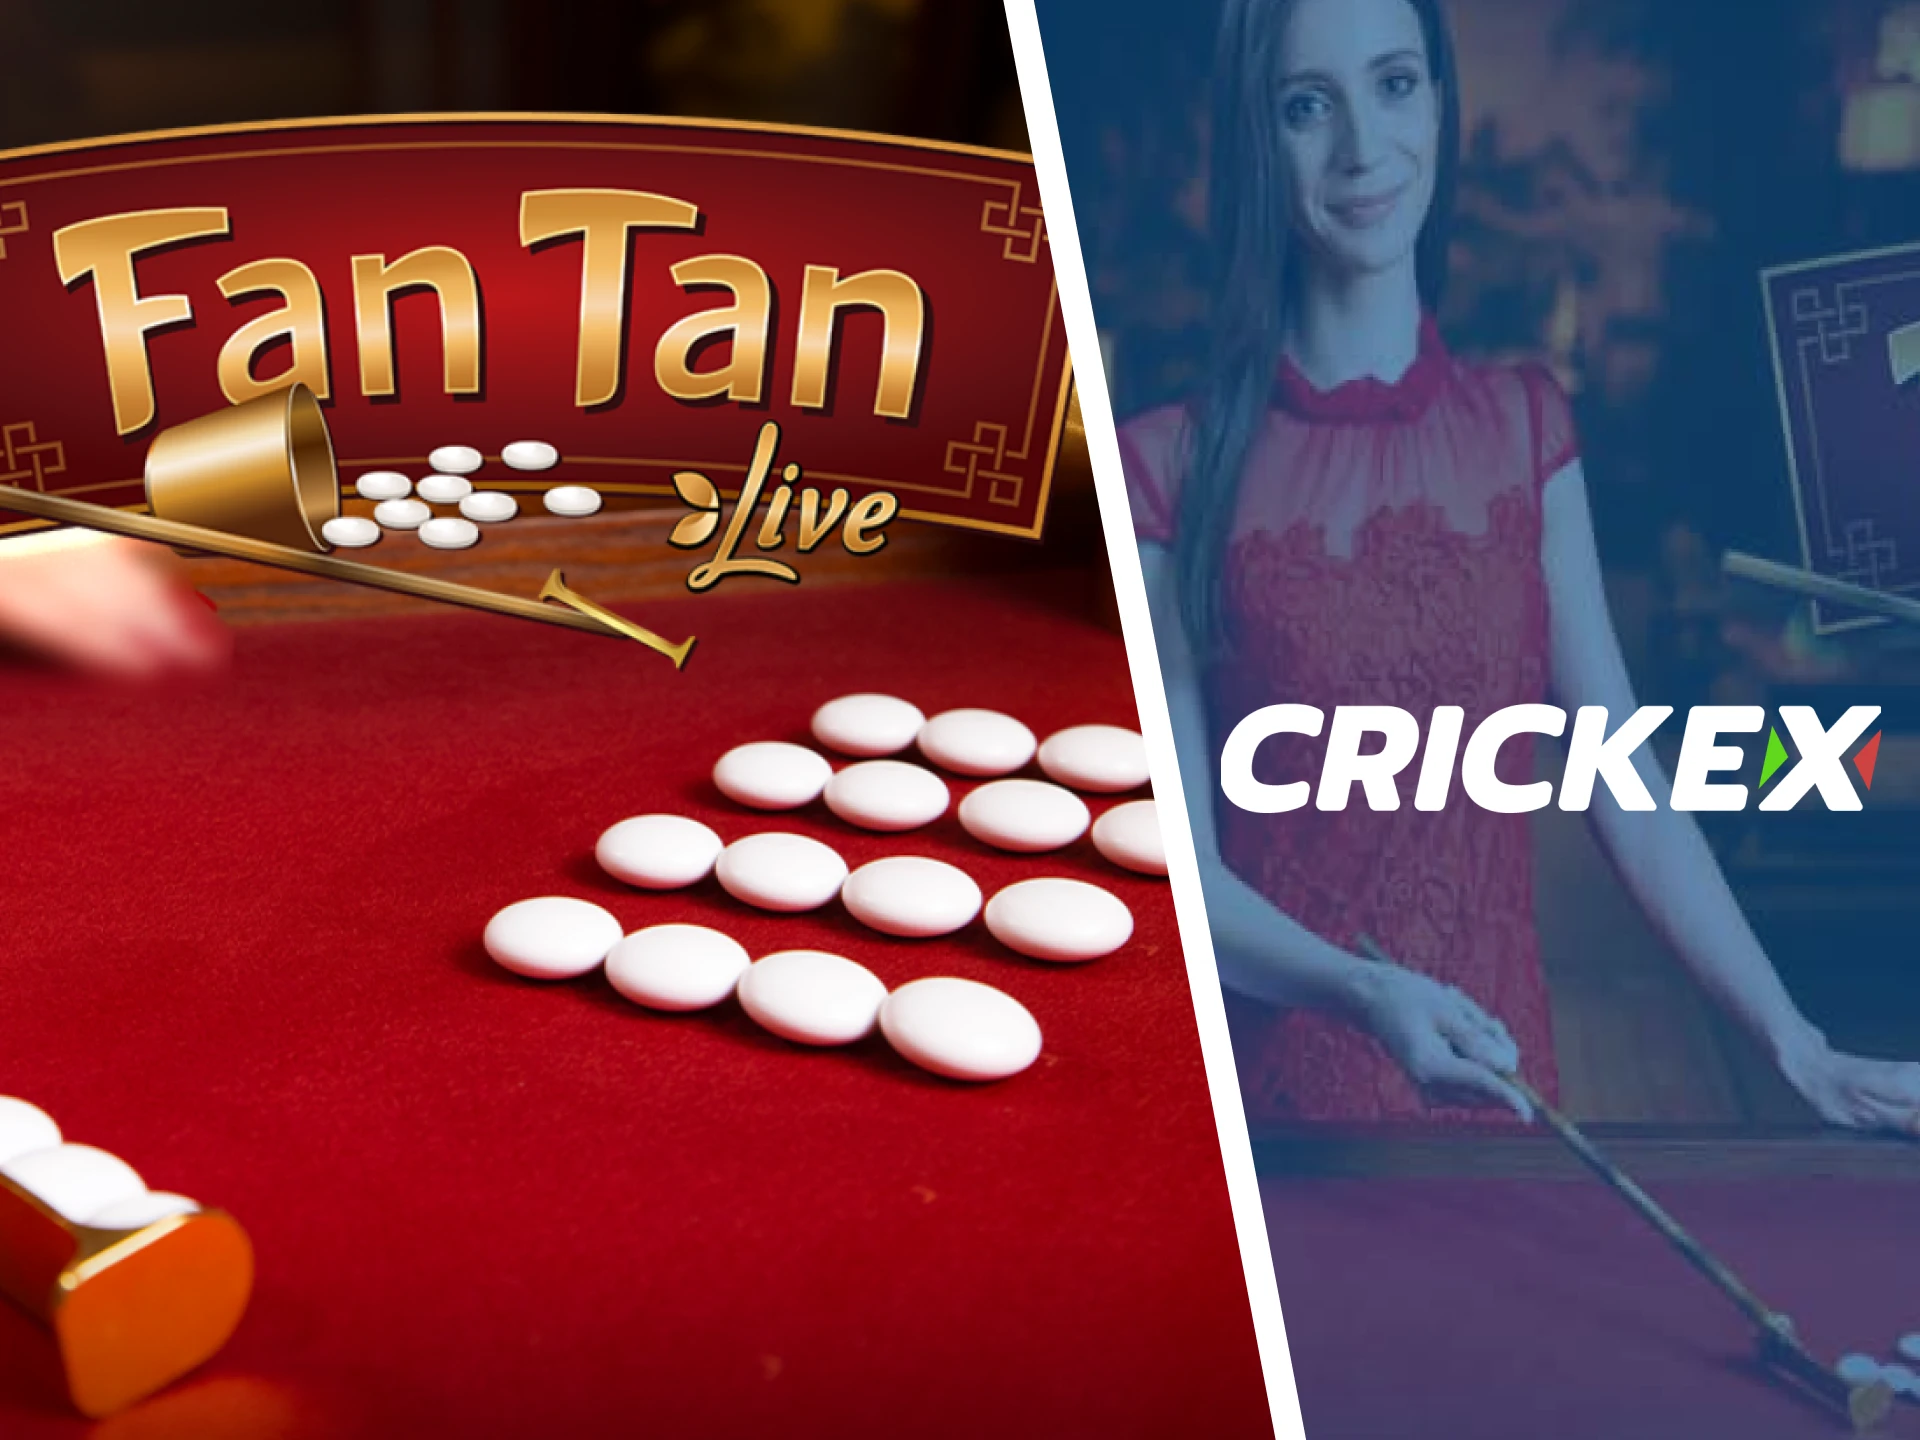 To play Crickex, choose Fan Tan.